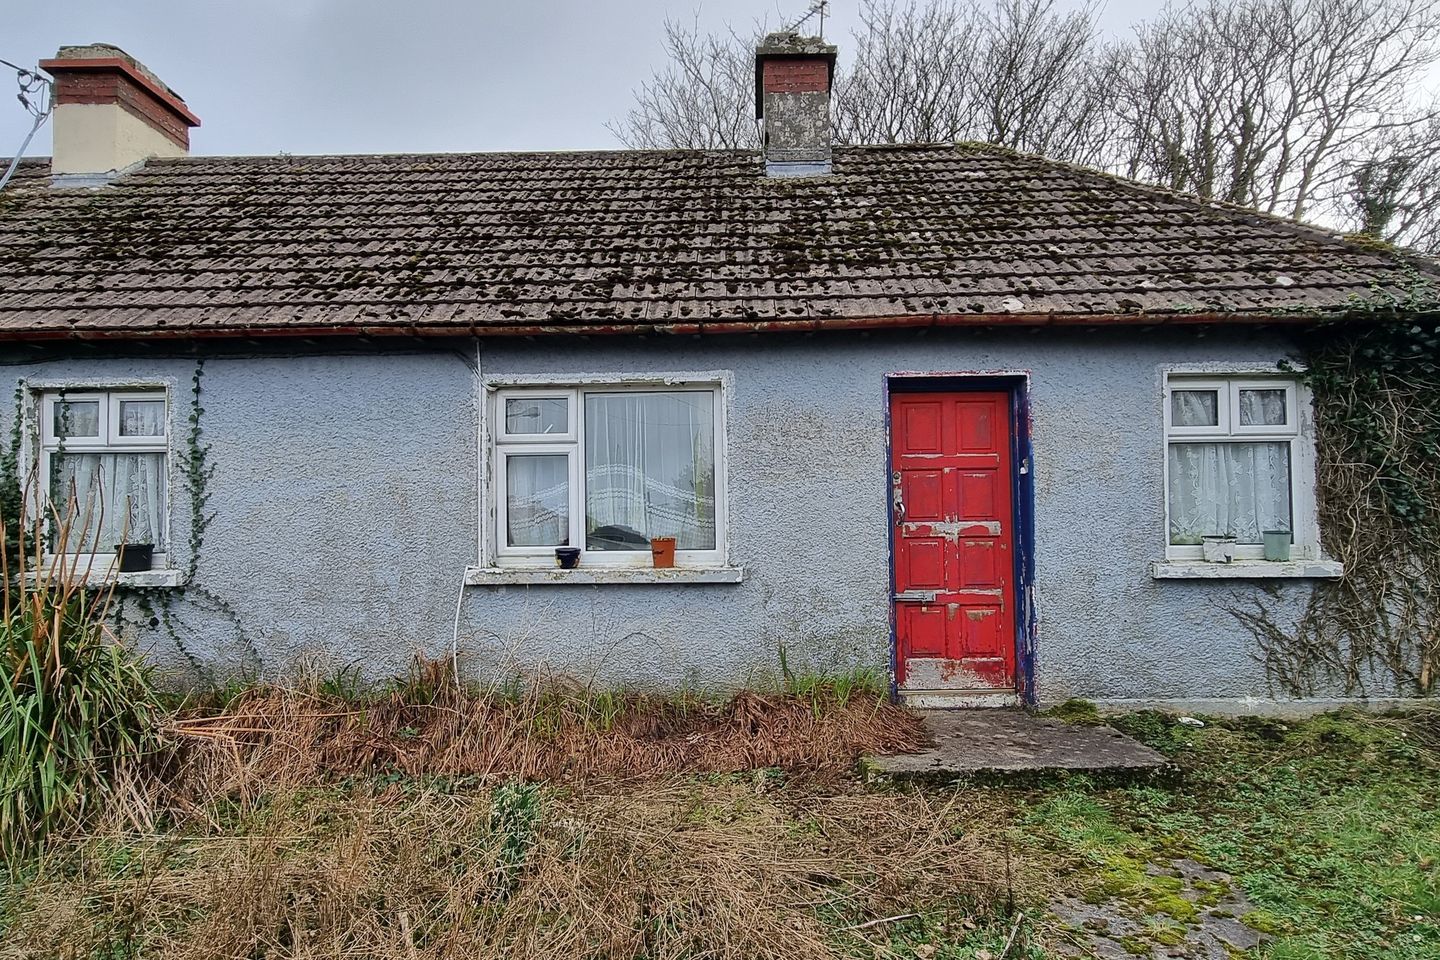 Fortland Cottages, Easkey, Co. Sligo